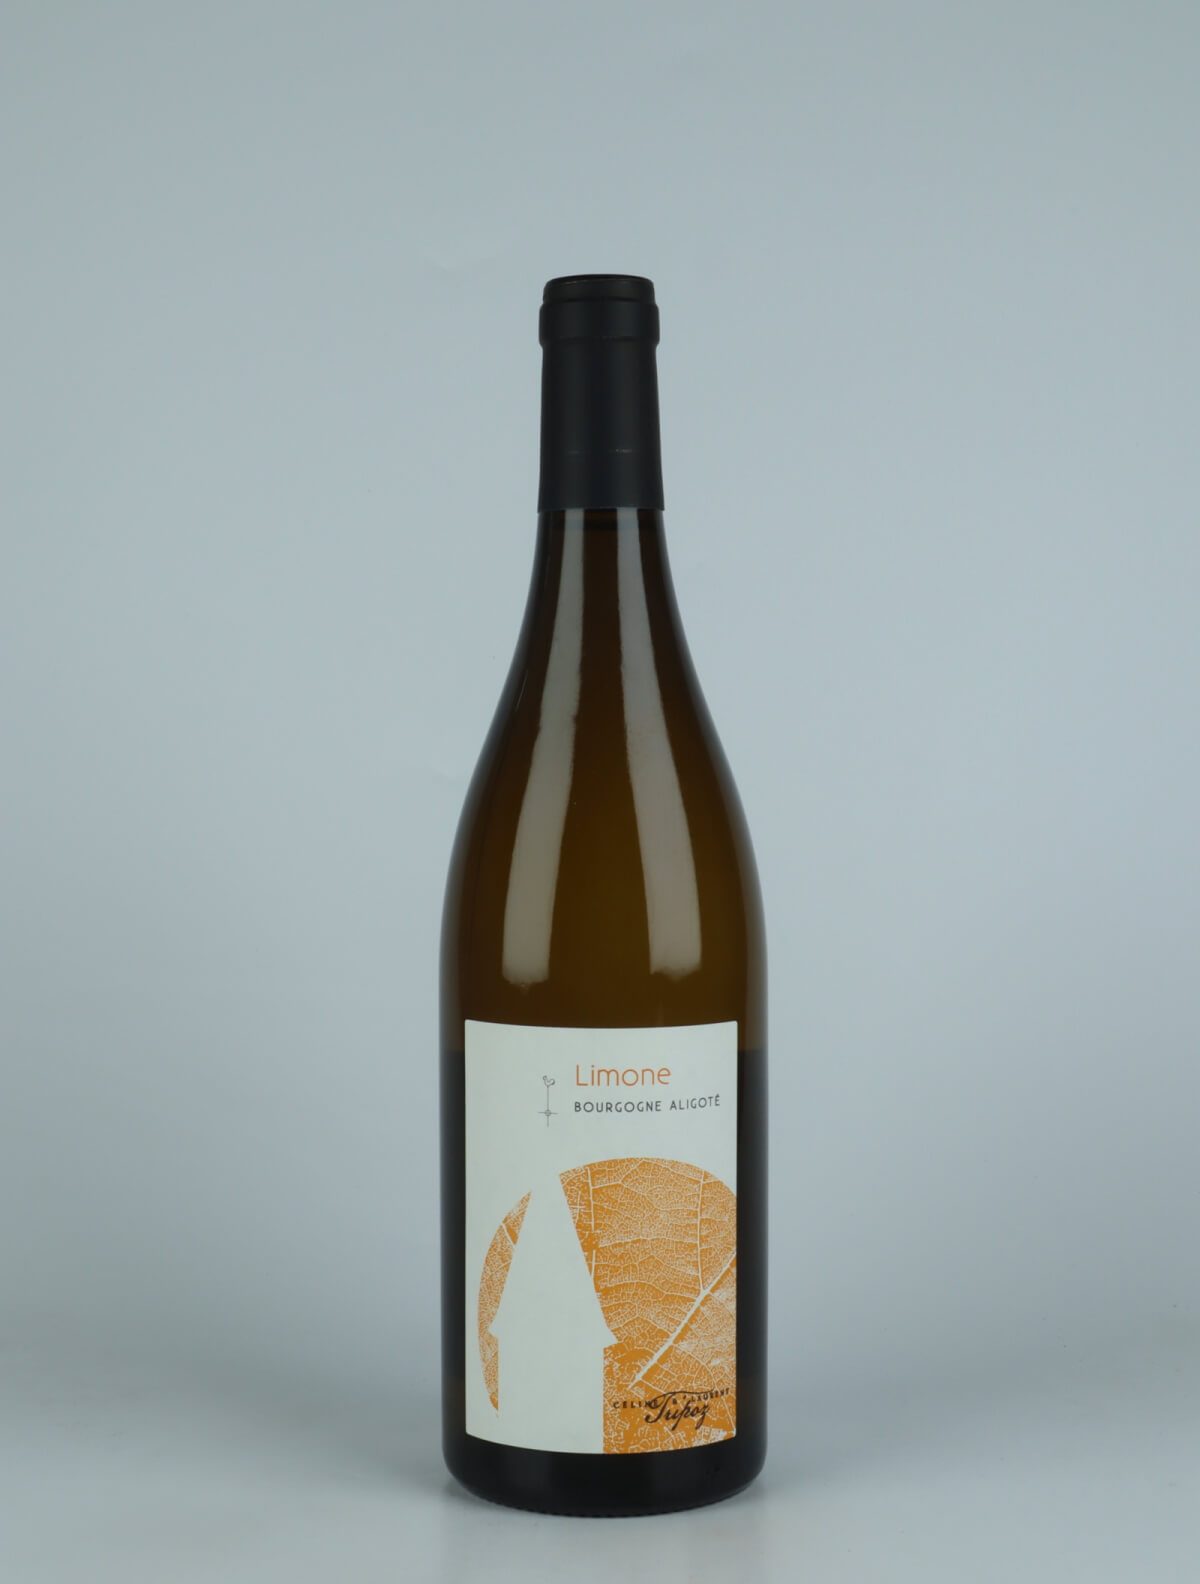 En flaske 2022 Bourgogne Aligoté - Limone Hvidvin fra Céline & Laurent Tripoz, Bourgogne i Frankrig